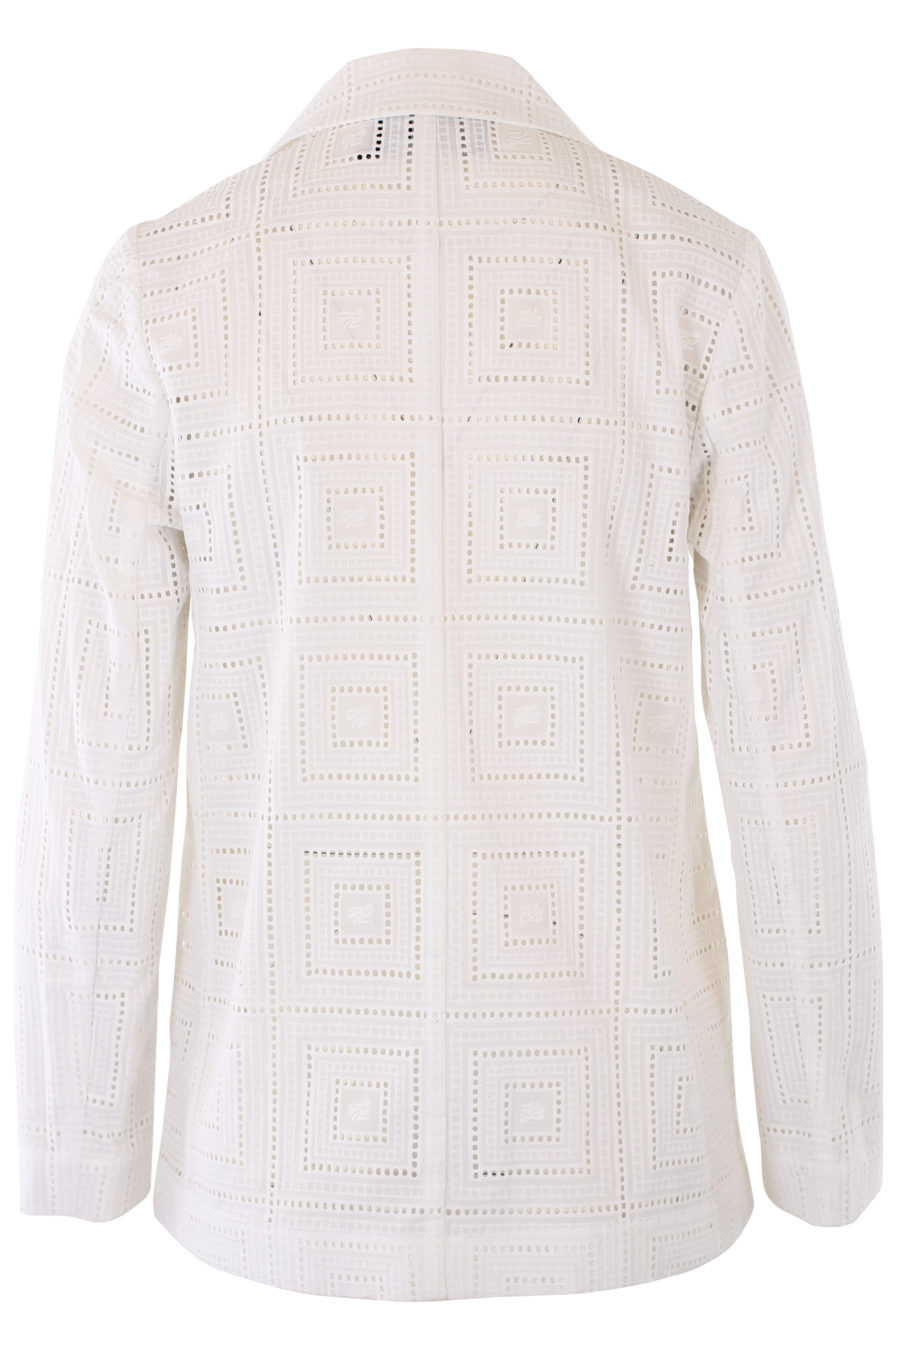 White embroidered blazer - IMG 1233